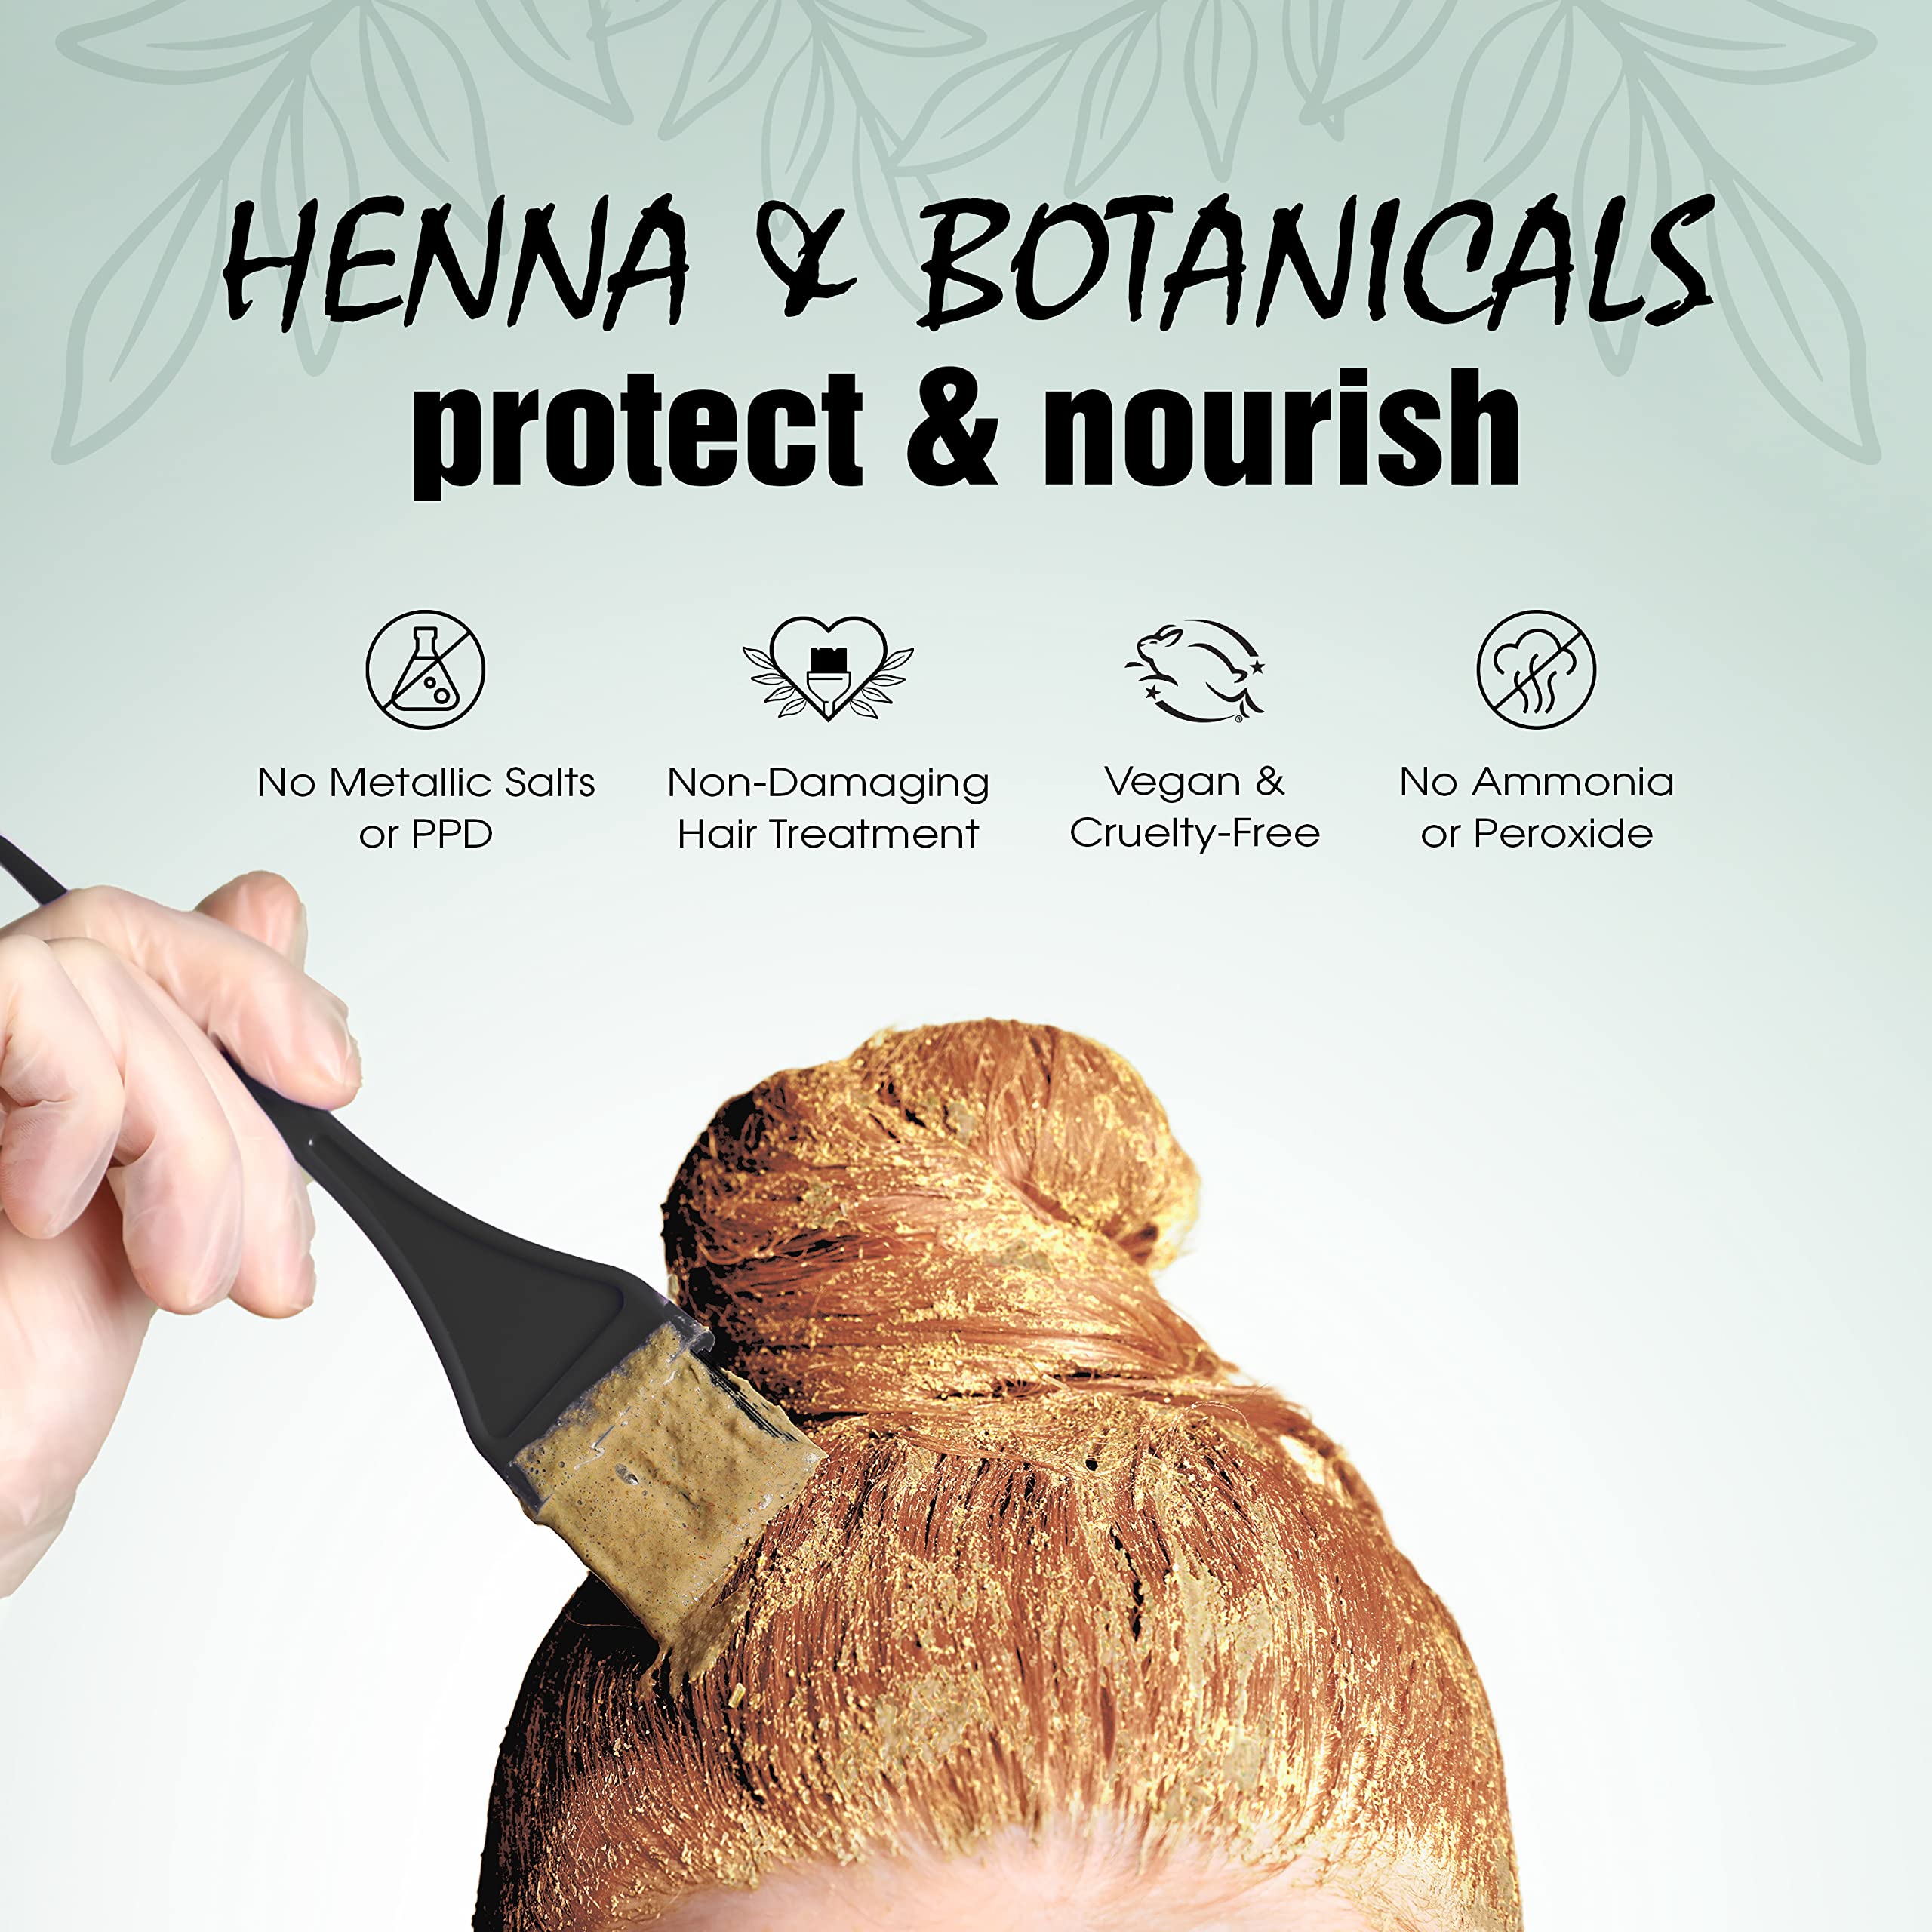 Light Mountain Henna Hair Color & Conditioner - Auburn Hair Dye for Men/Women, Organic Henna Leaf Powder and Botanicals, Chemical-Free, Semi-Permanent Hair Color, 4 Oz  